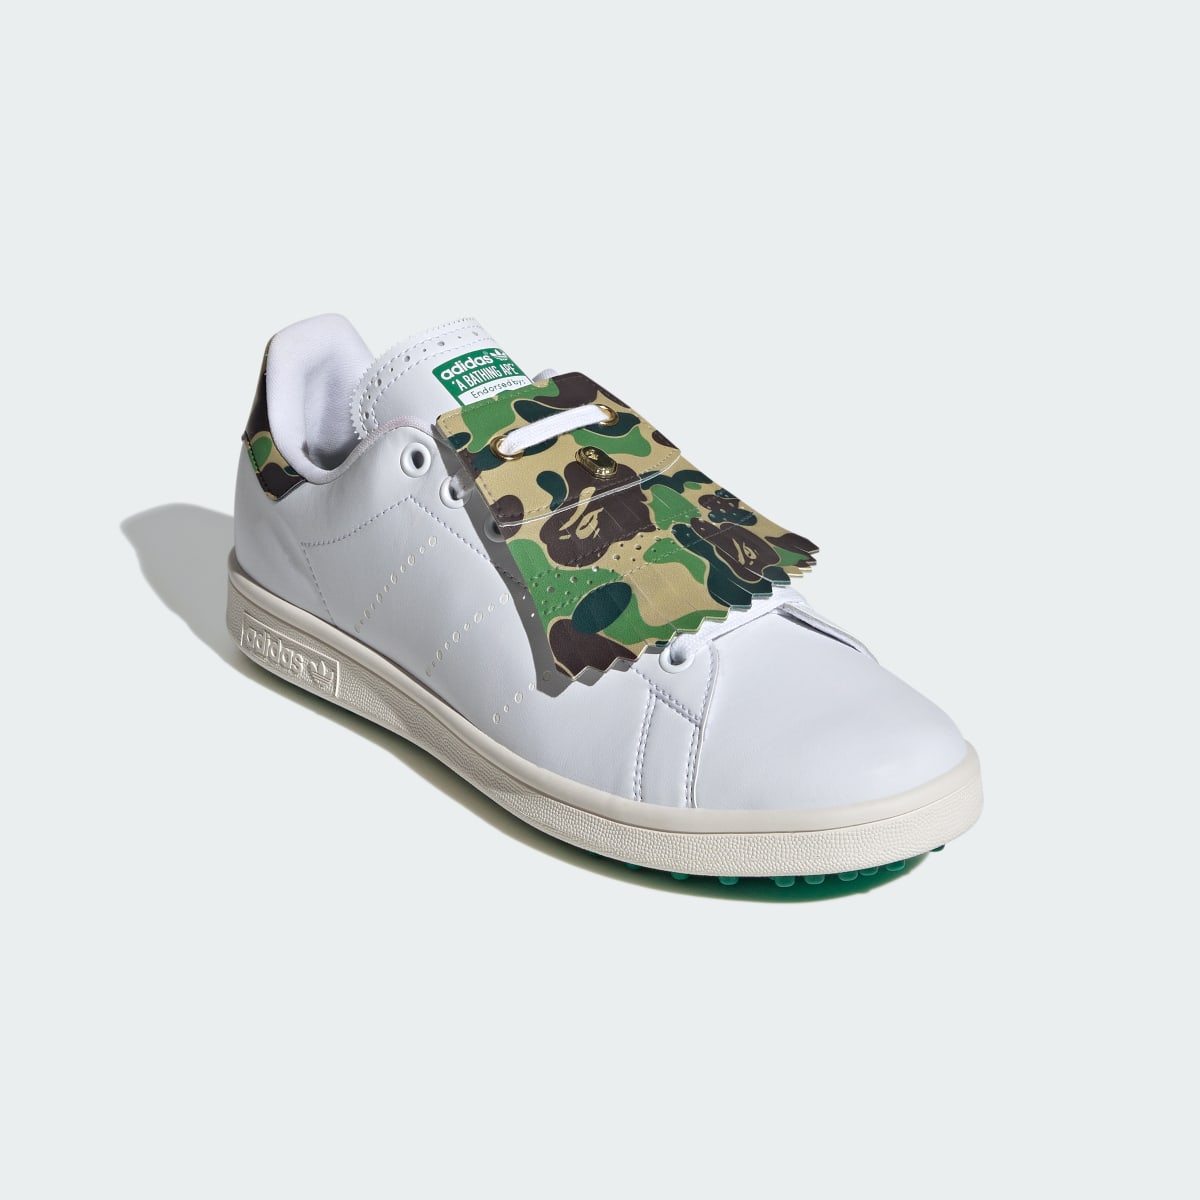 Adidas BAPE x adidas Stan Smith Golf Shoes. 9